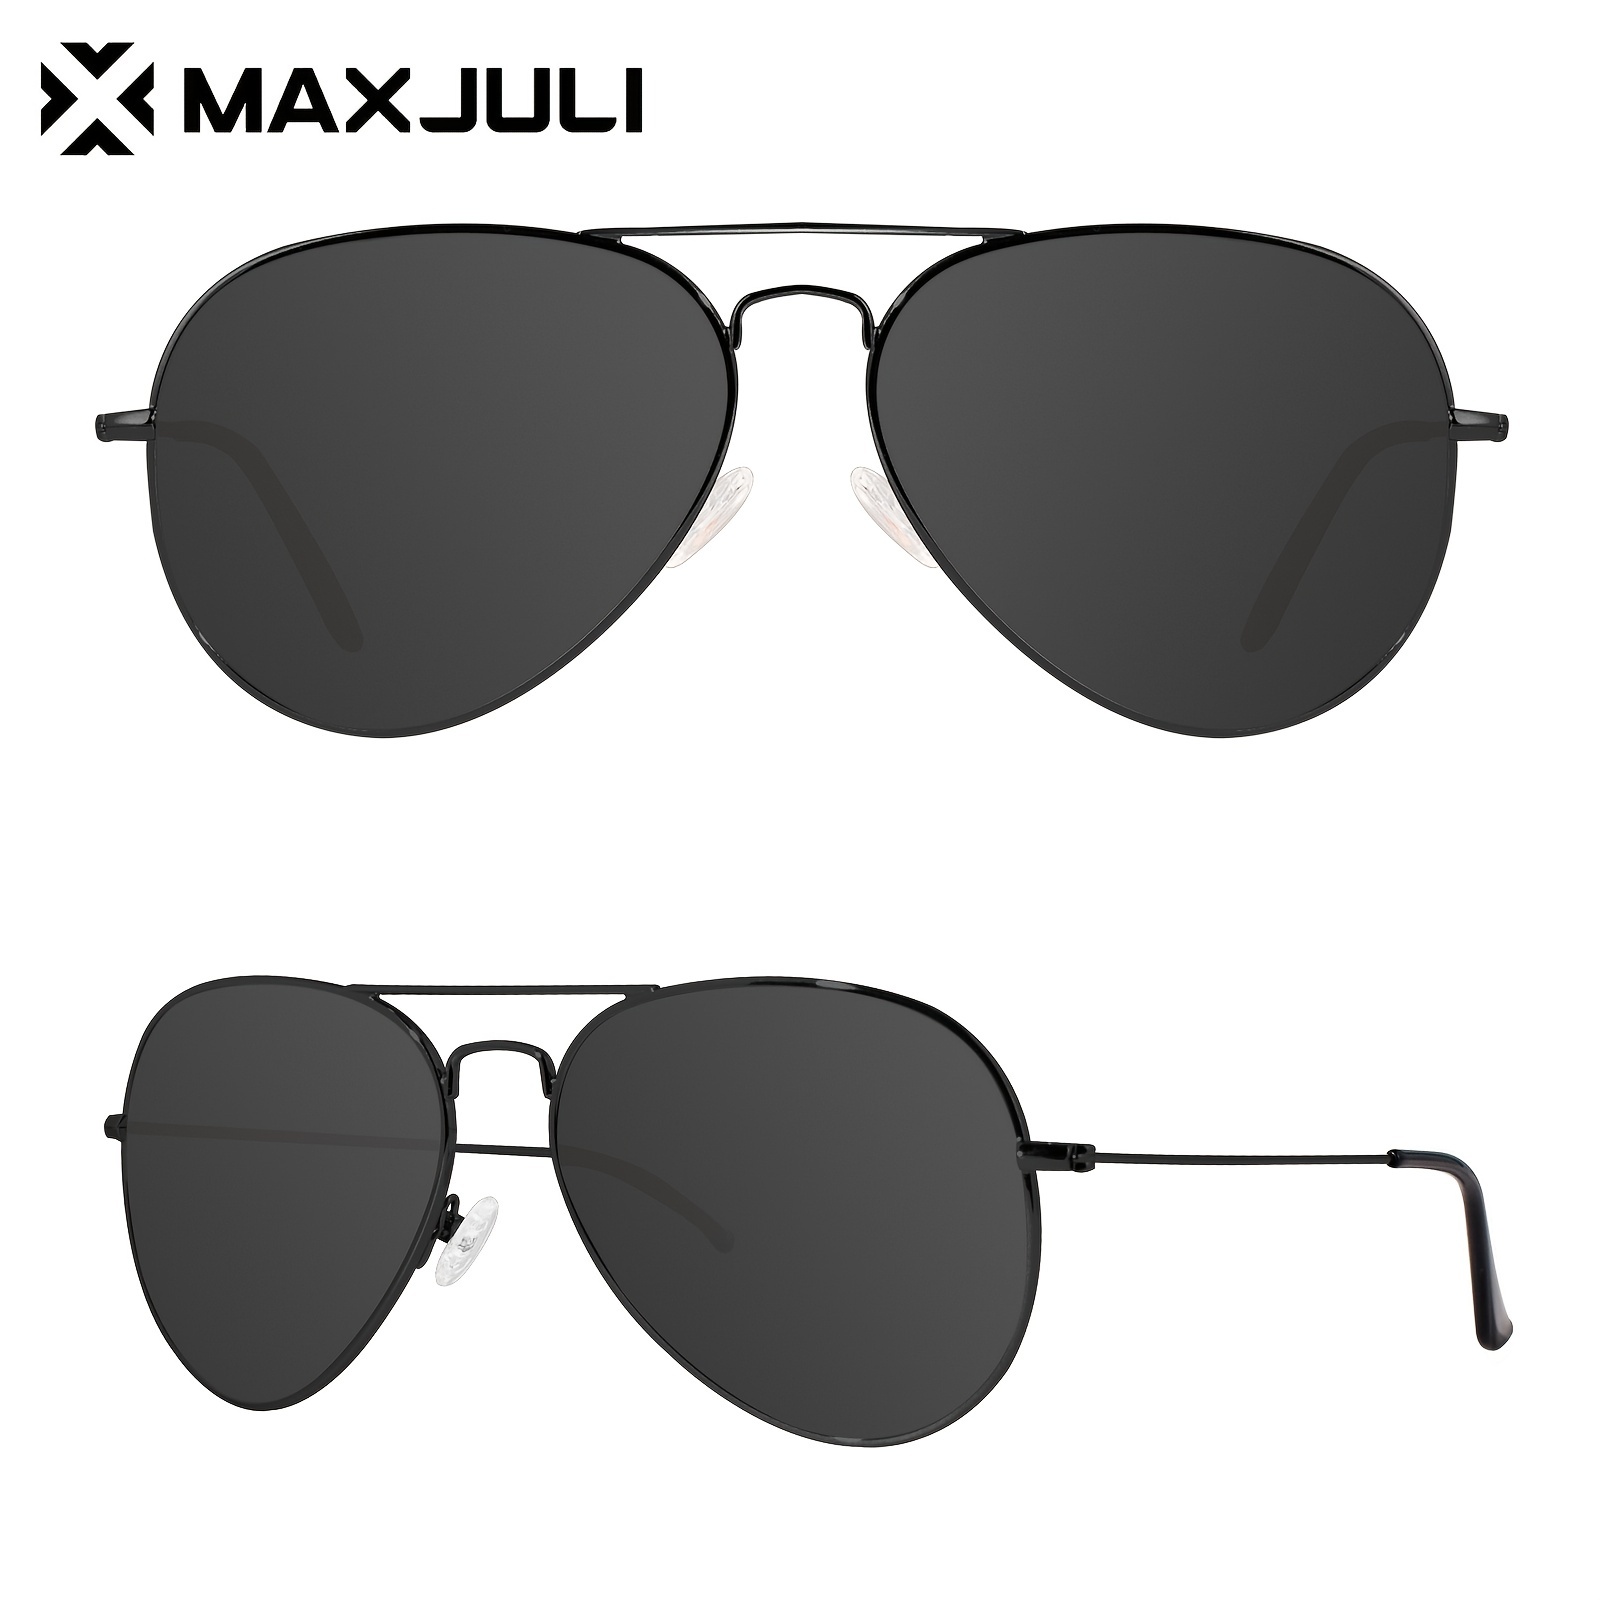 MAXJULI Polarized Sunglasses, Aviator XL Sunglasses for Big Heads Men Women, Metal Frame 8810 Large Head Aviator Sunglasses, Oversized Sunglasses